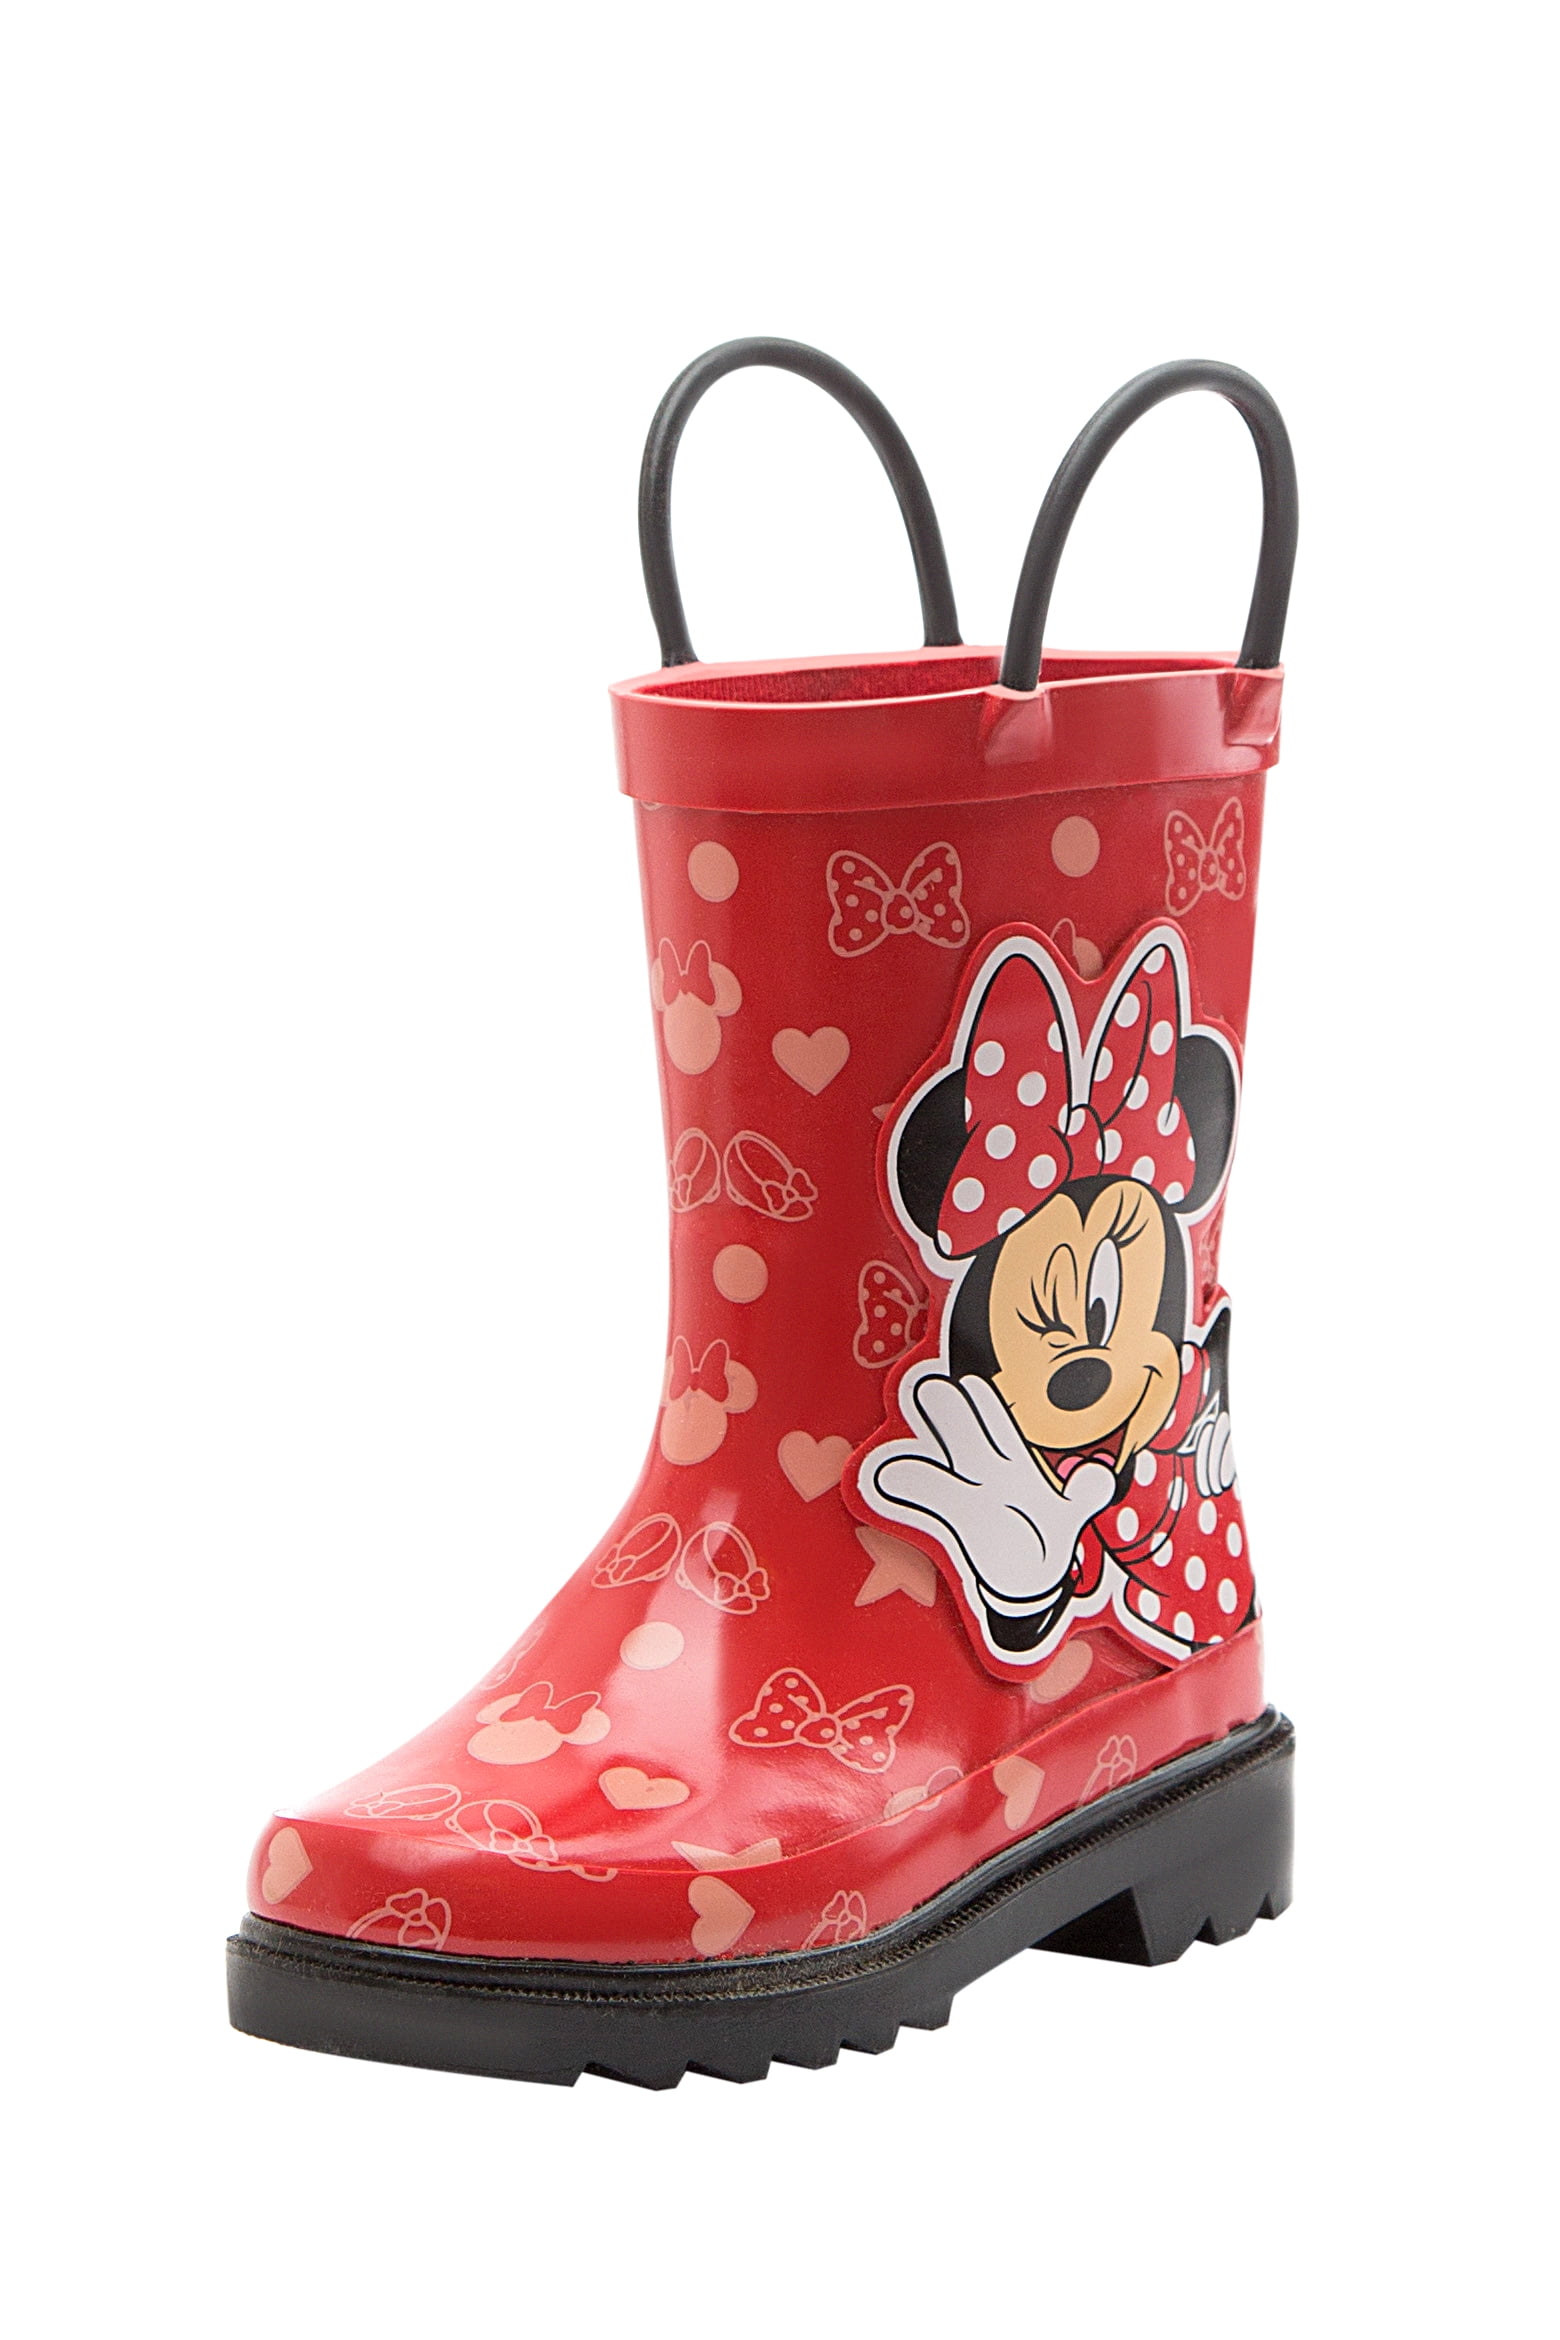 Disney Girls Minnie Mouse Rubber Rain 